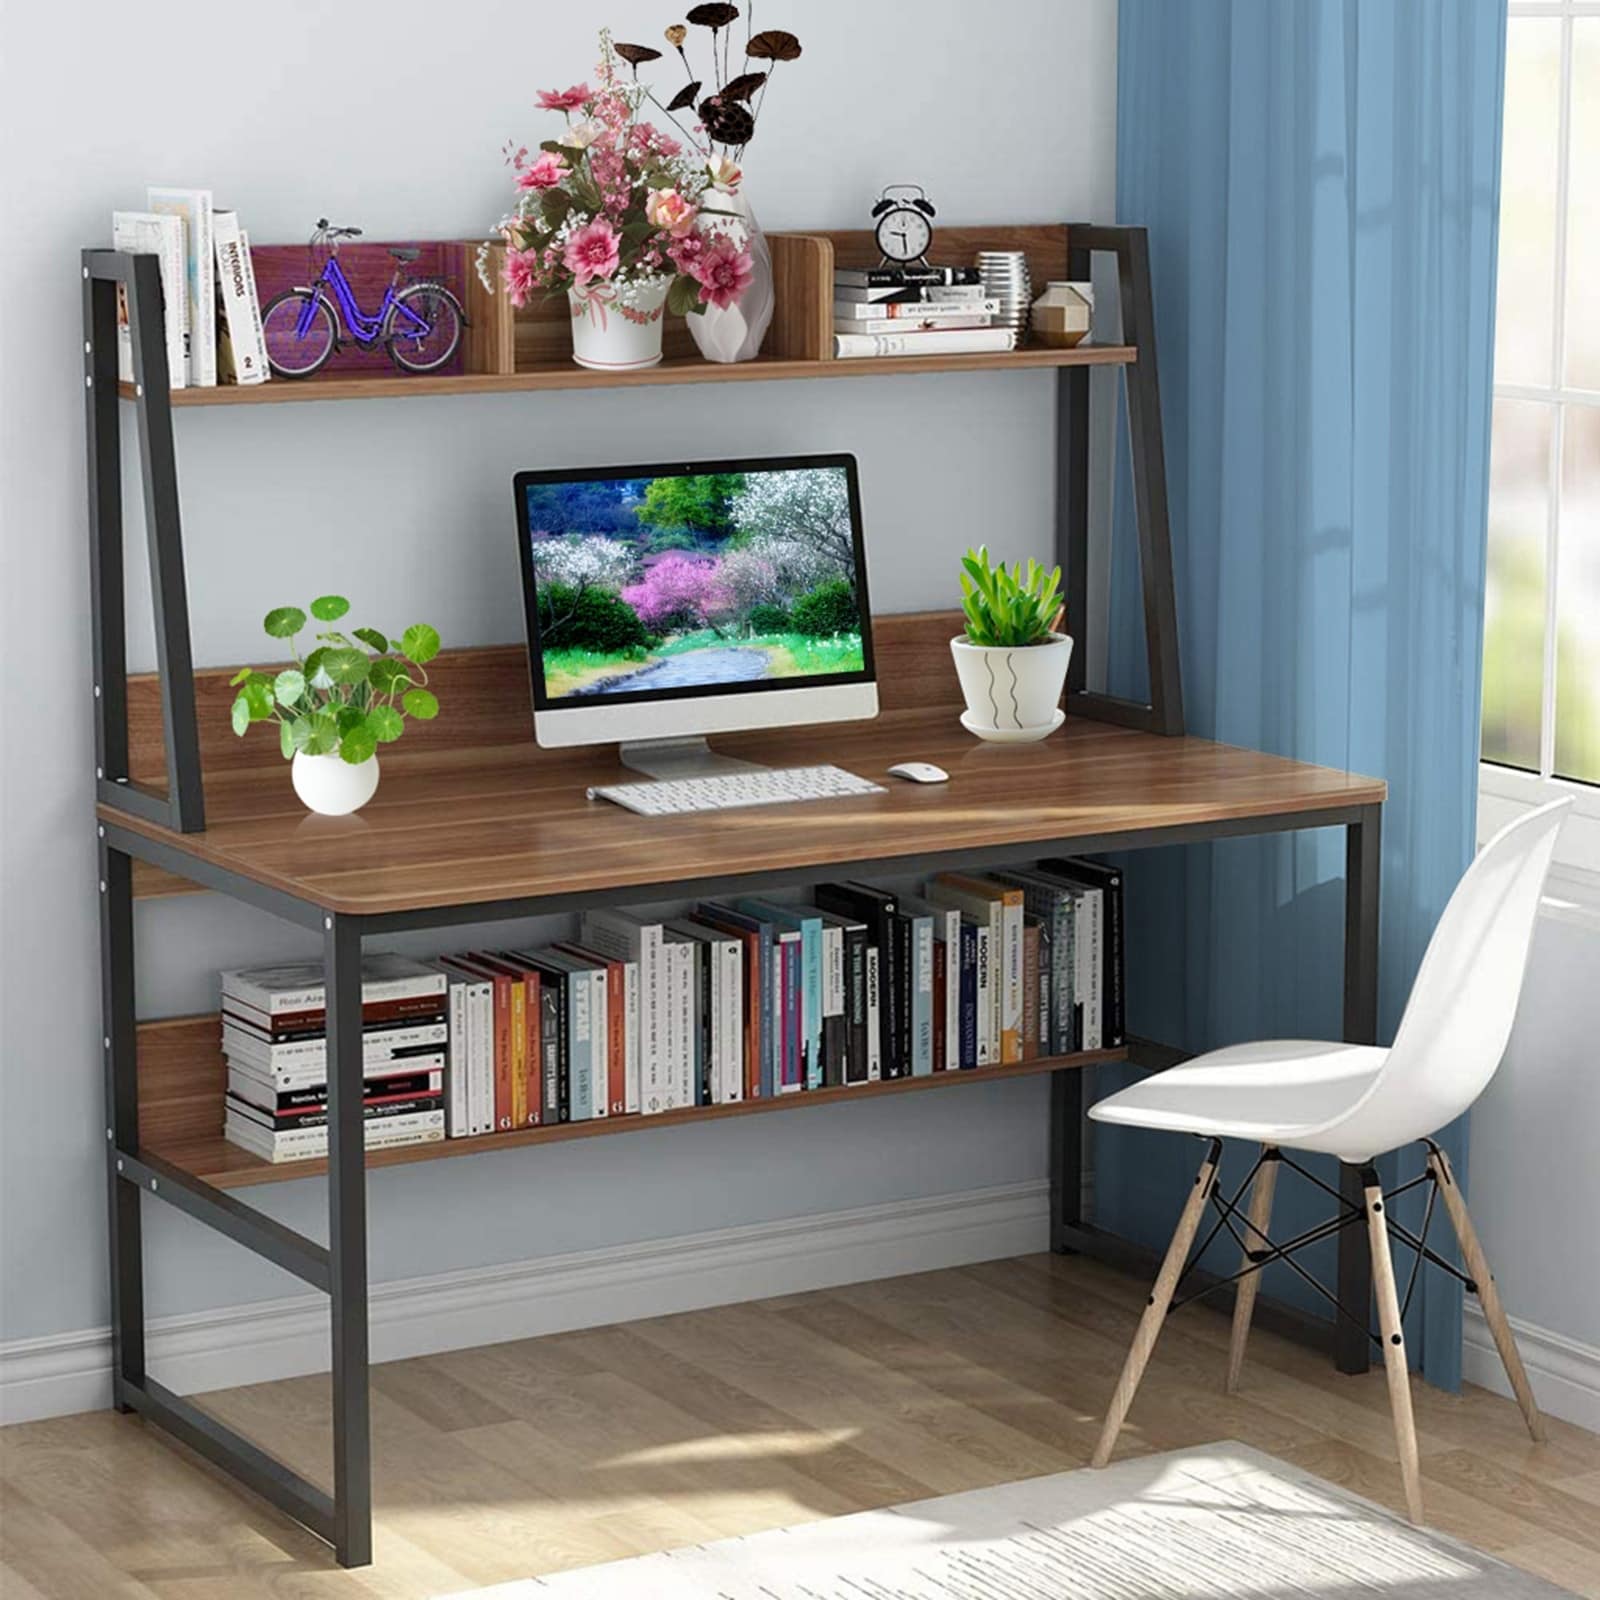 https://ak1.ostkcdn.com/images/products/is/images/direct/a616695fab4873a578f12e05f613575d3efa926c/Computer-Desk-Bookshelf-47-inch-Home-Office-Desk-Space-Saving-Design.jpg